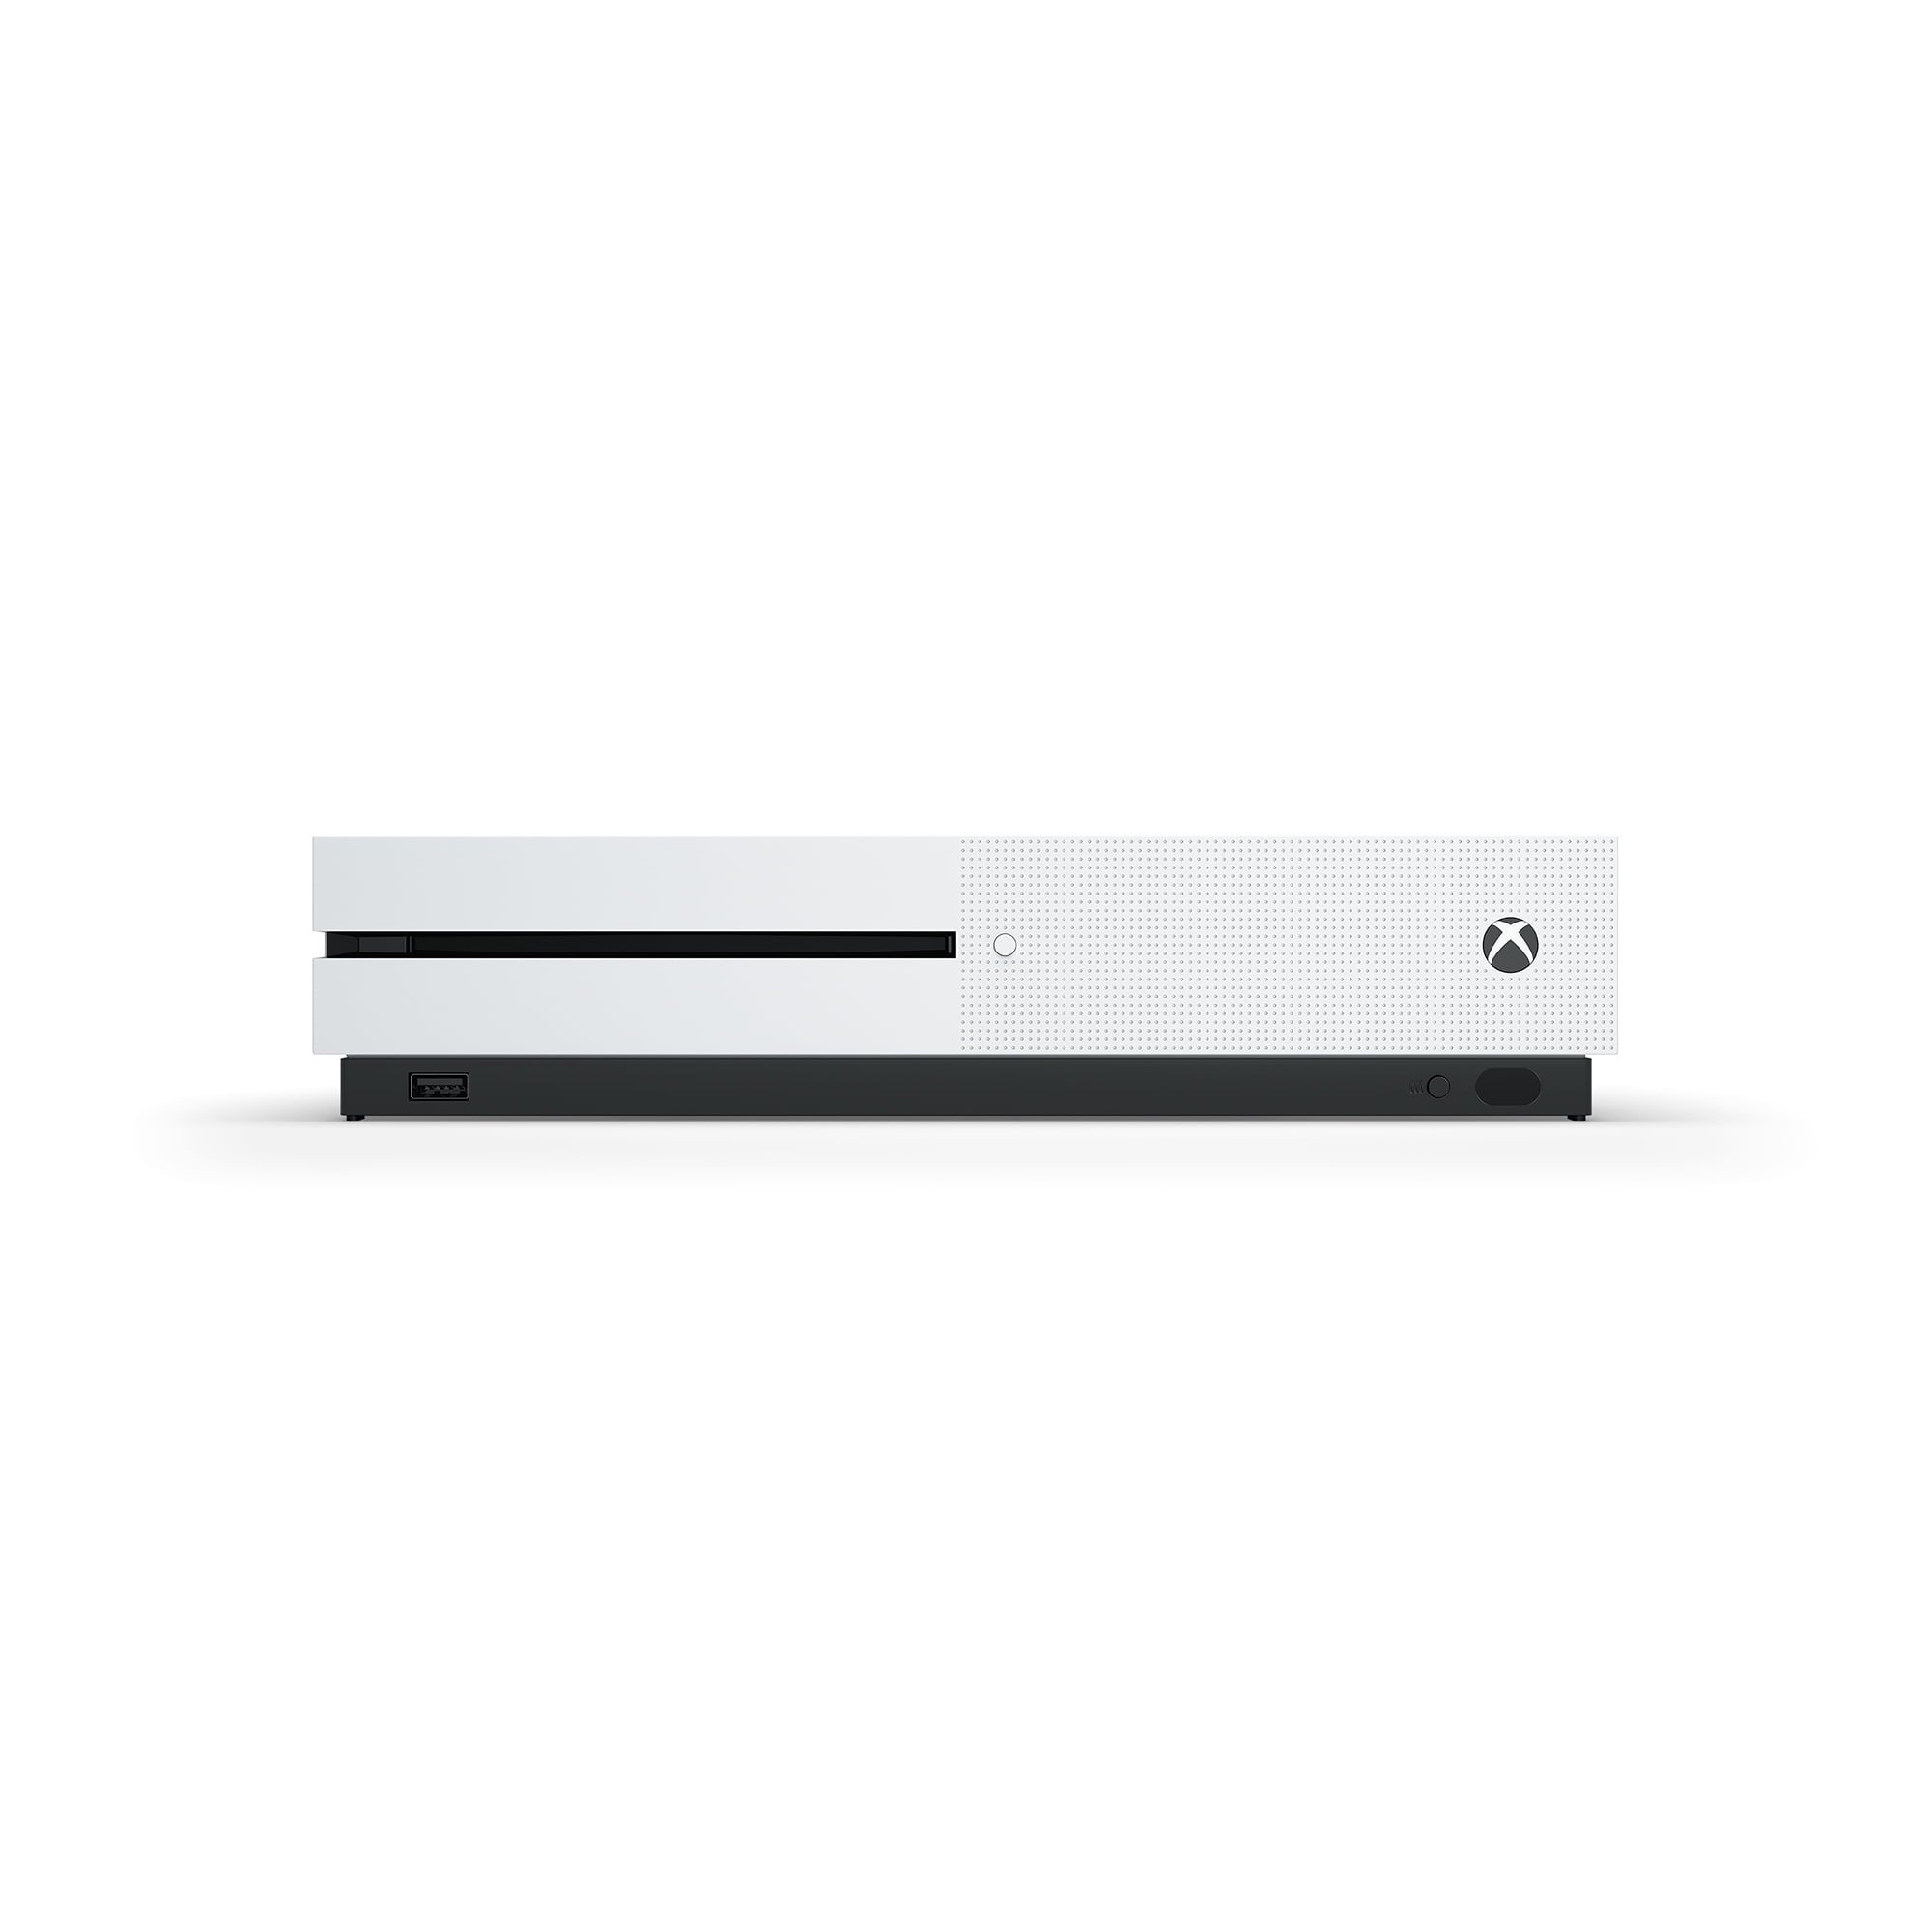 Microsoft Xbox One S 1TB Minecraft Creators Bundle, White, 234 